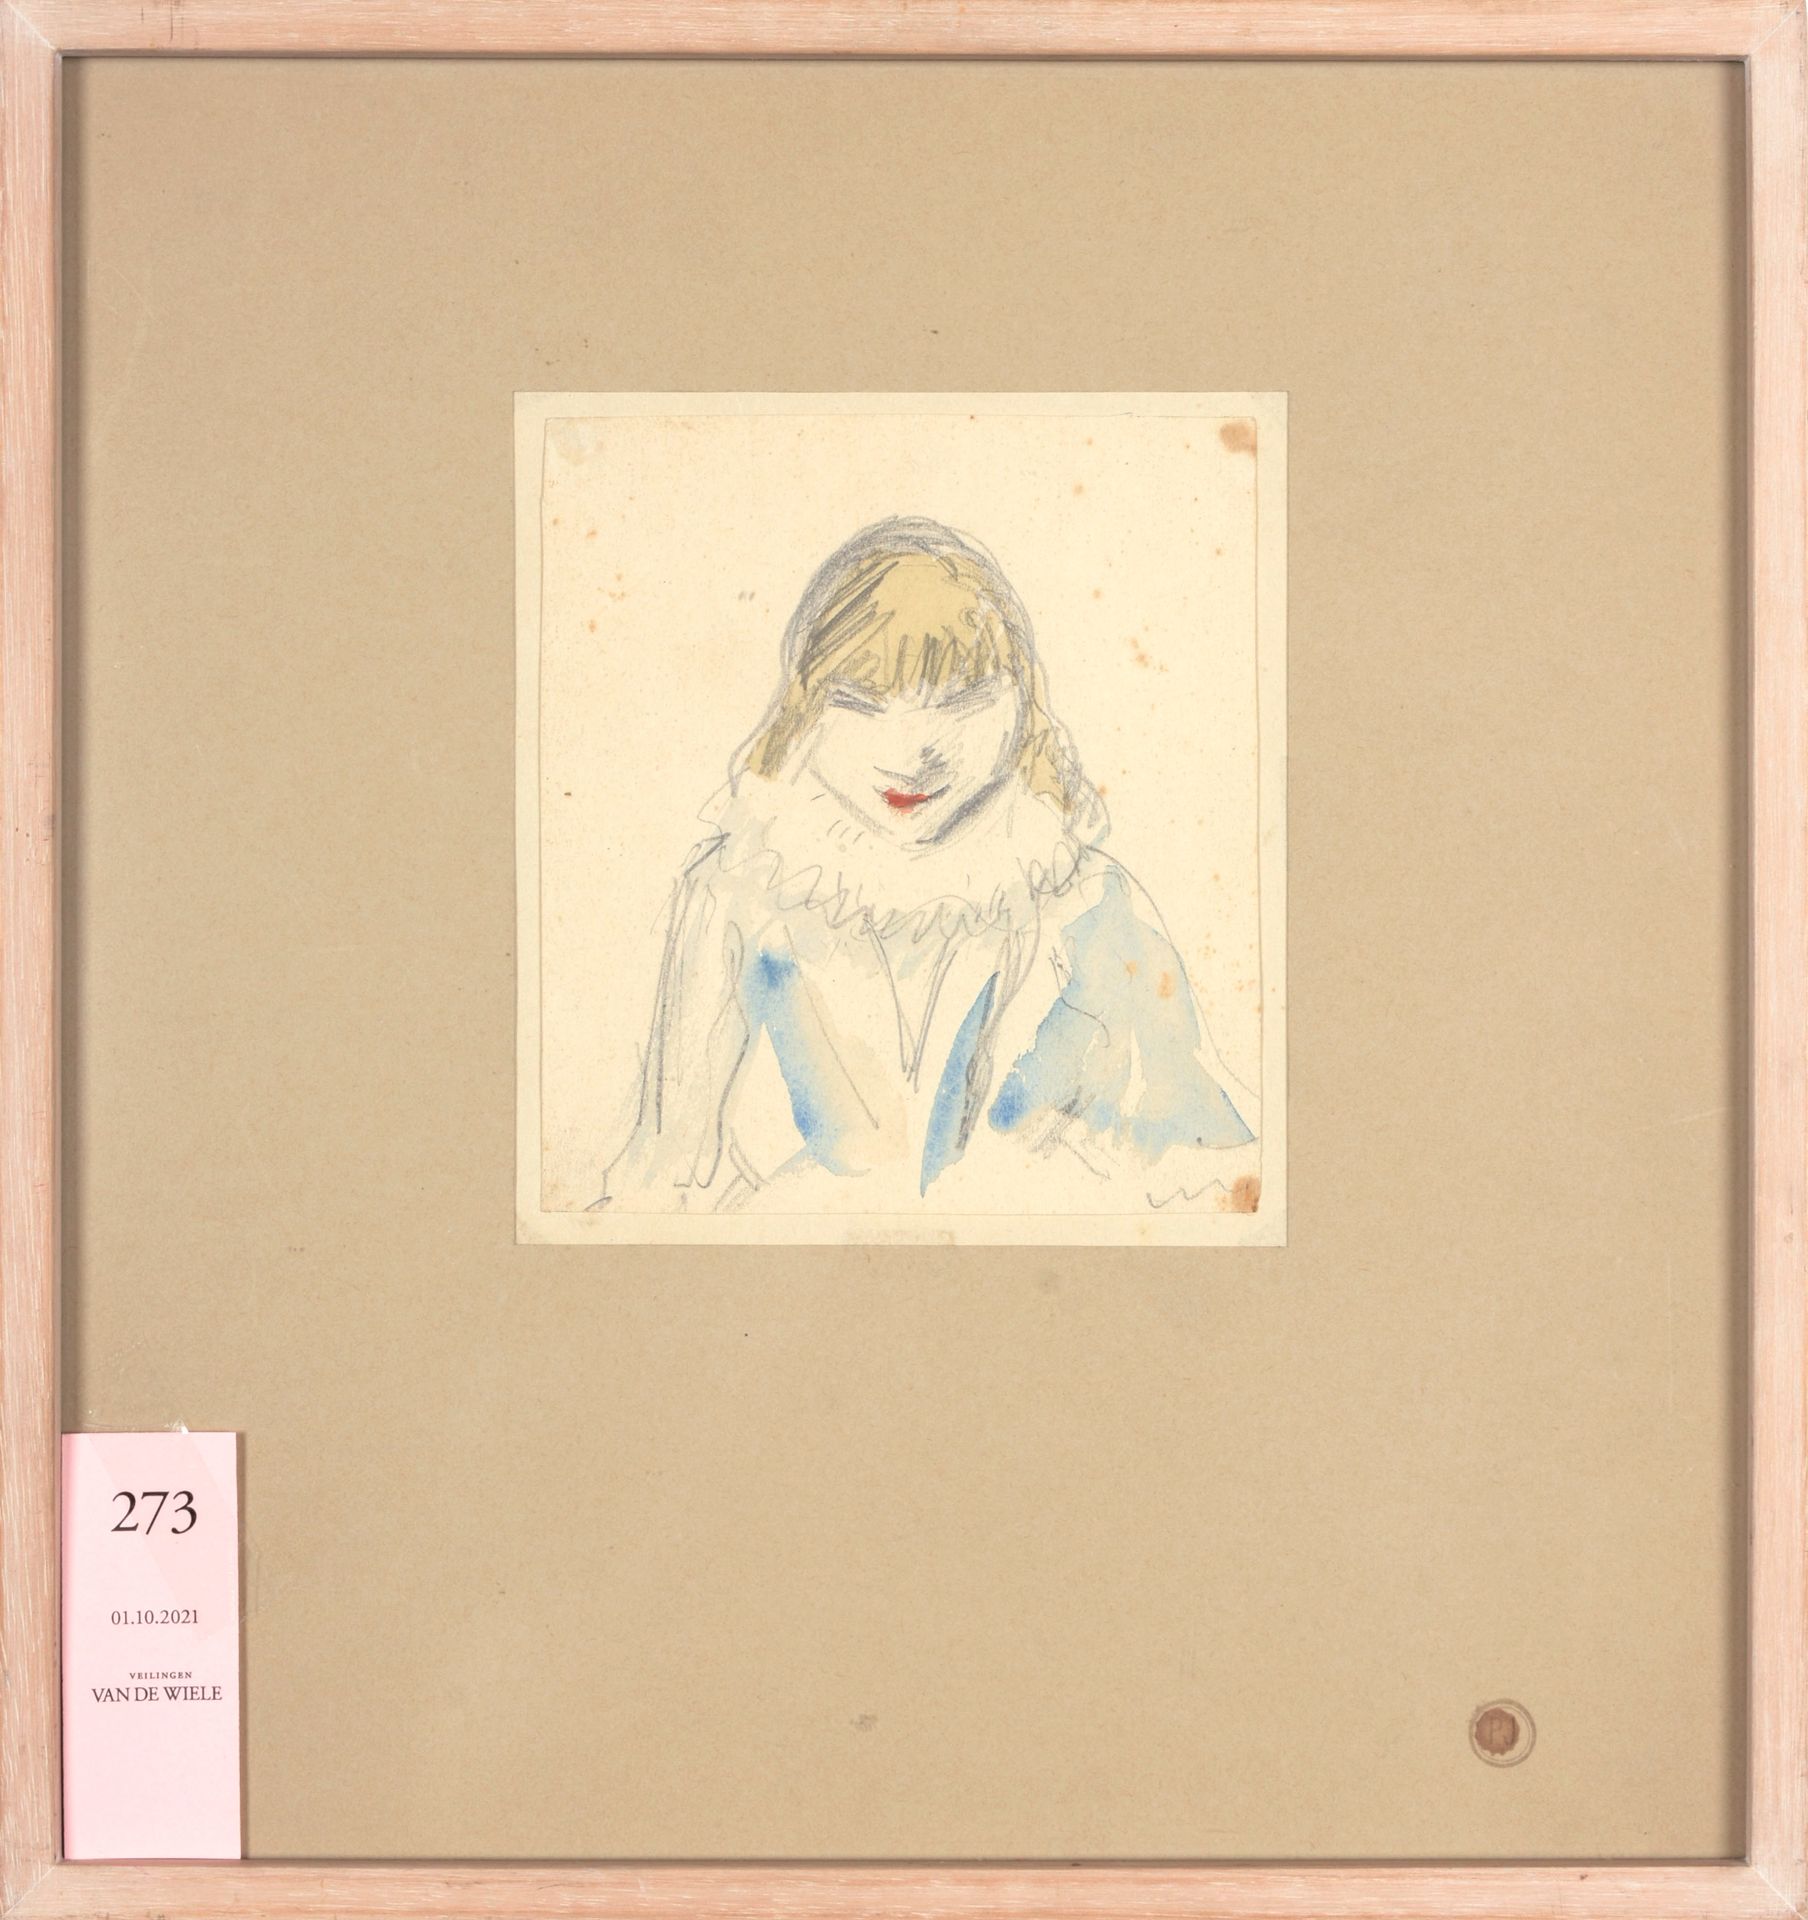 JOOSTENS, Paul (1889-1960) 基金会

水彩画(13.5 x 12 cm)，研讨会在左边。英格利希特